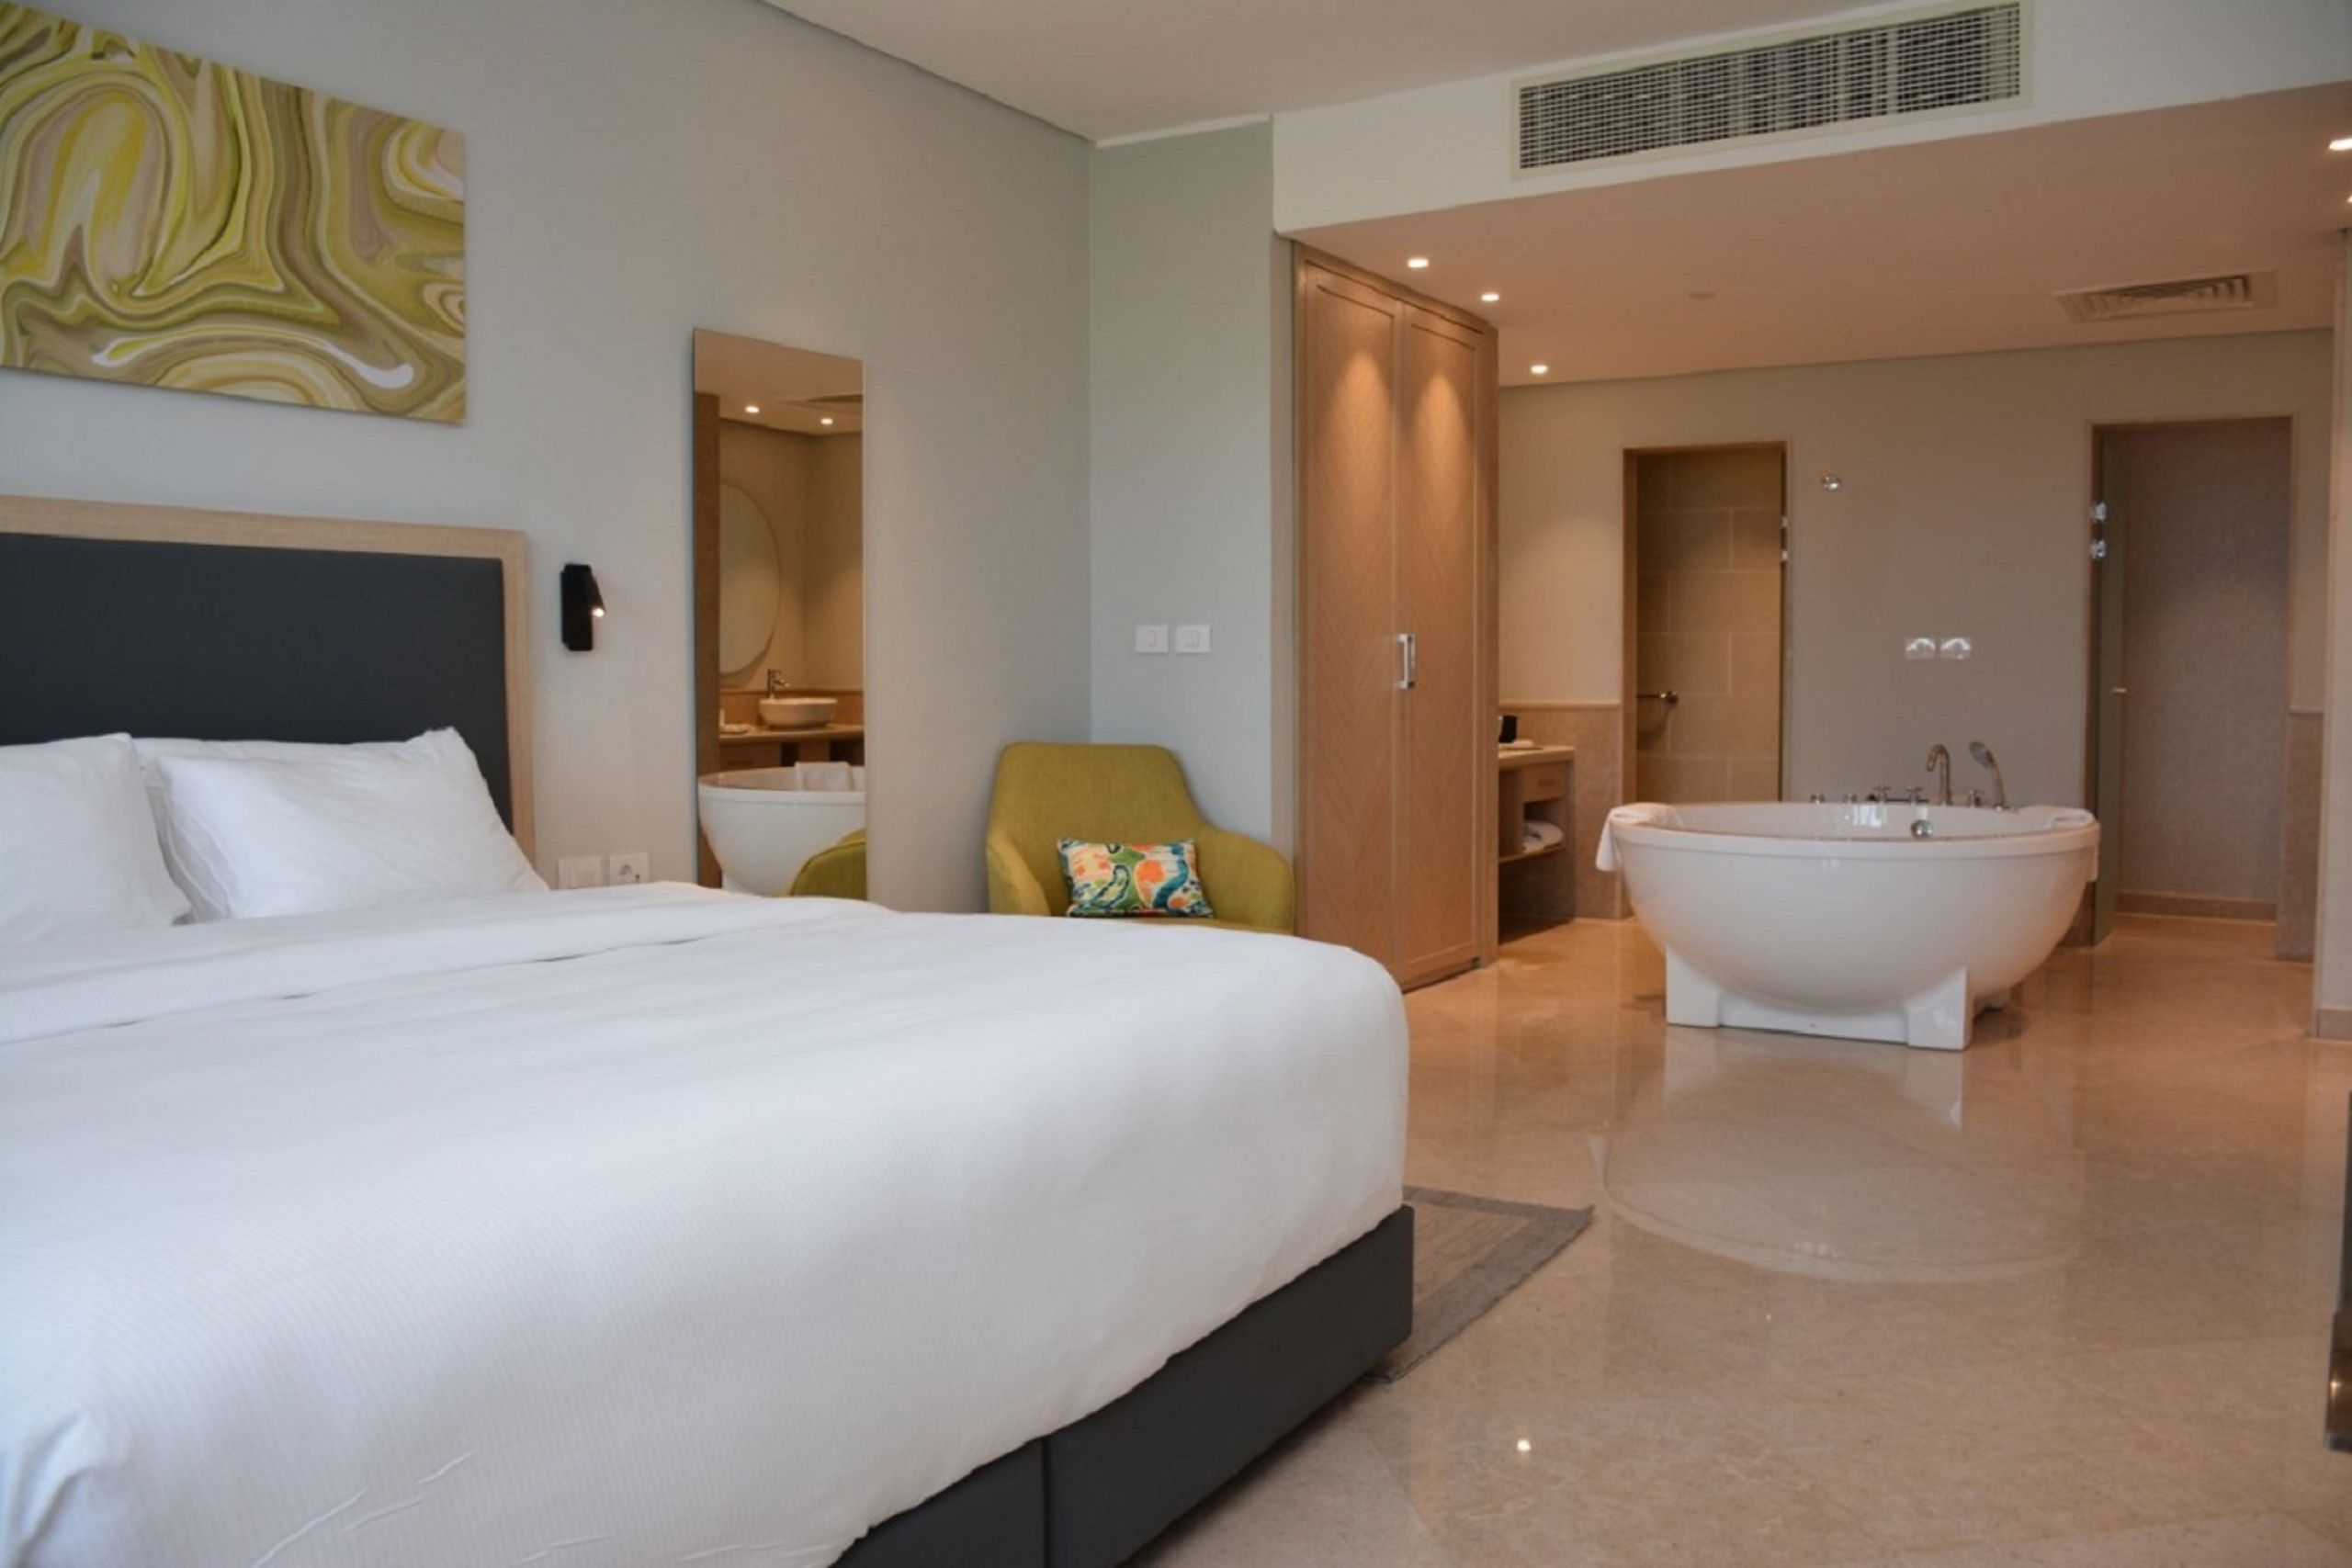 Steigenberger Aldau Beach Hotel - Hurghada - Egypten - Sviten - säng och badrum